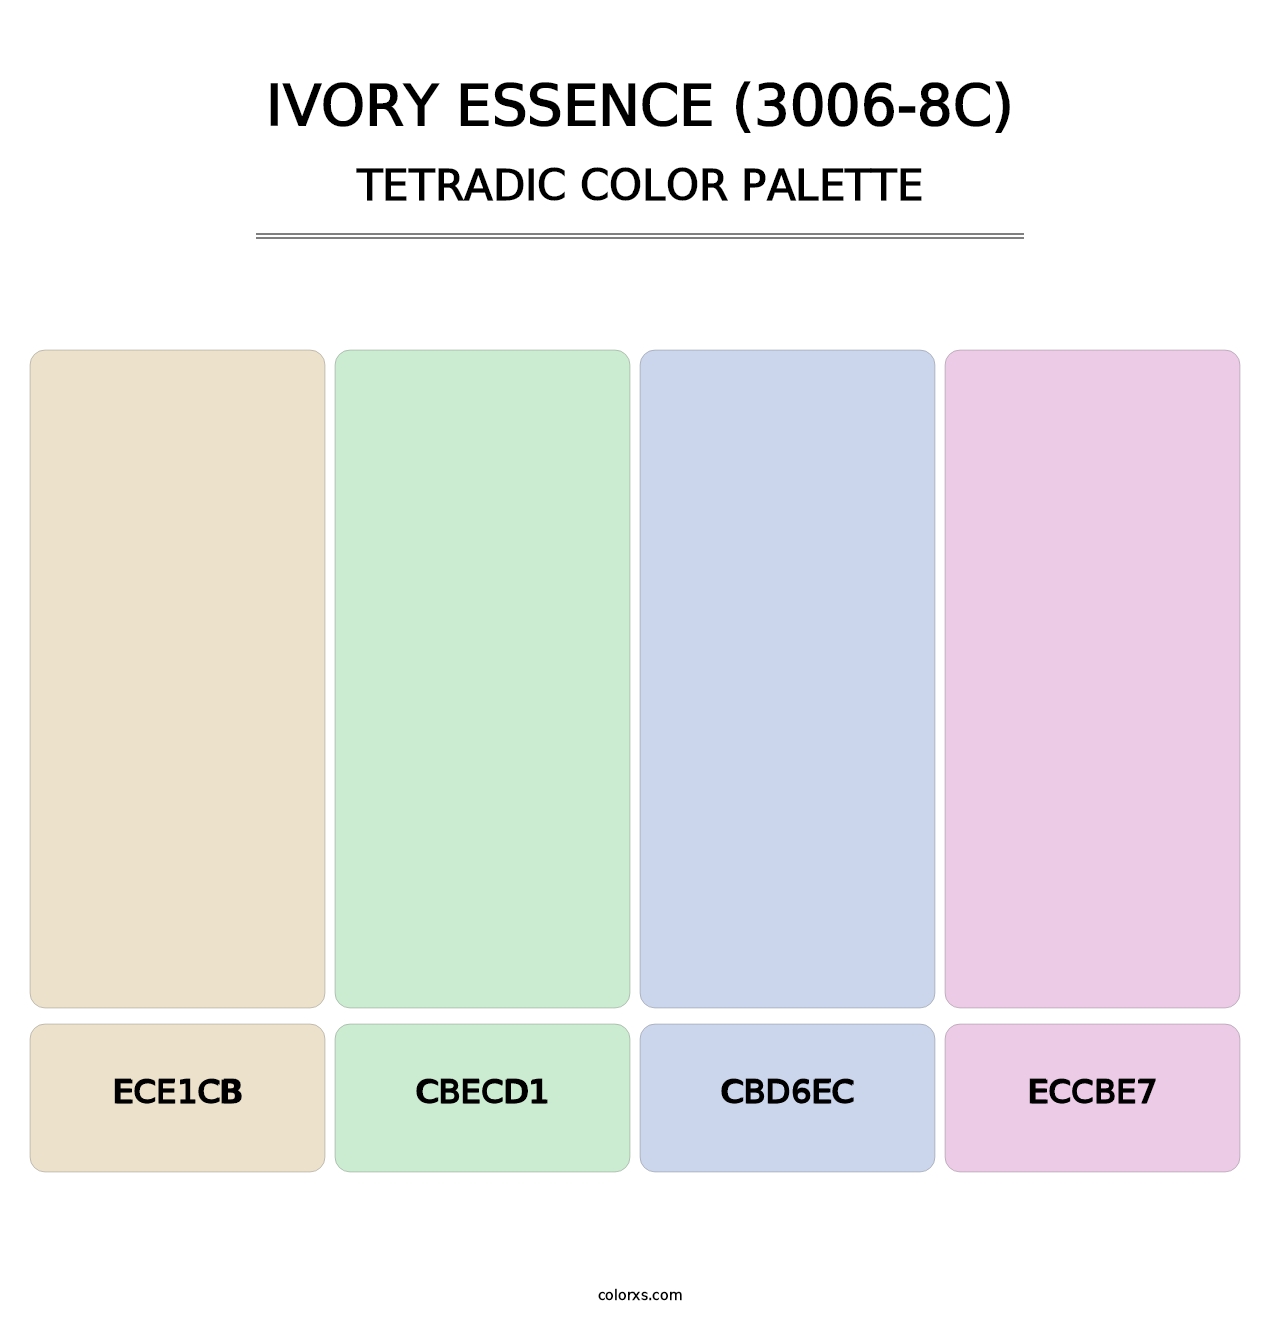 Ivory Essence (3006-8C) - Tetradic Color Palette